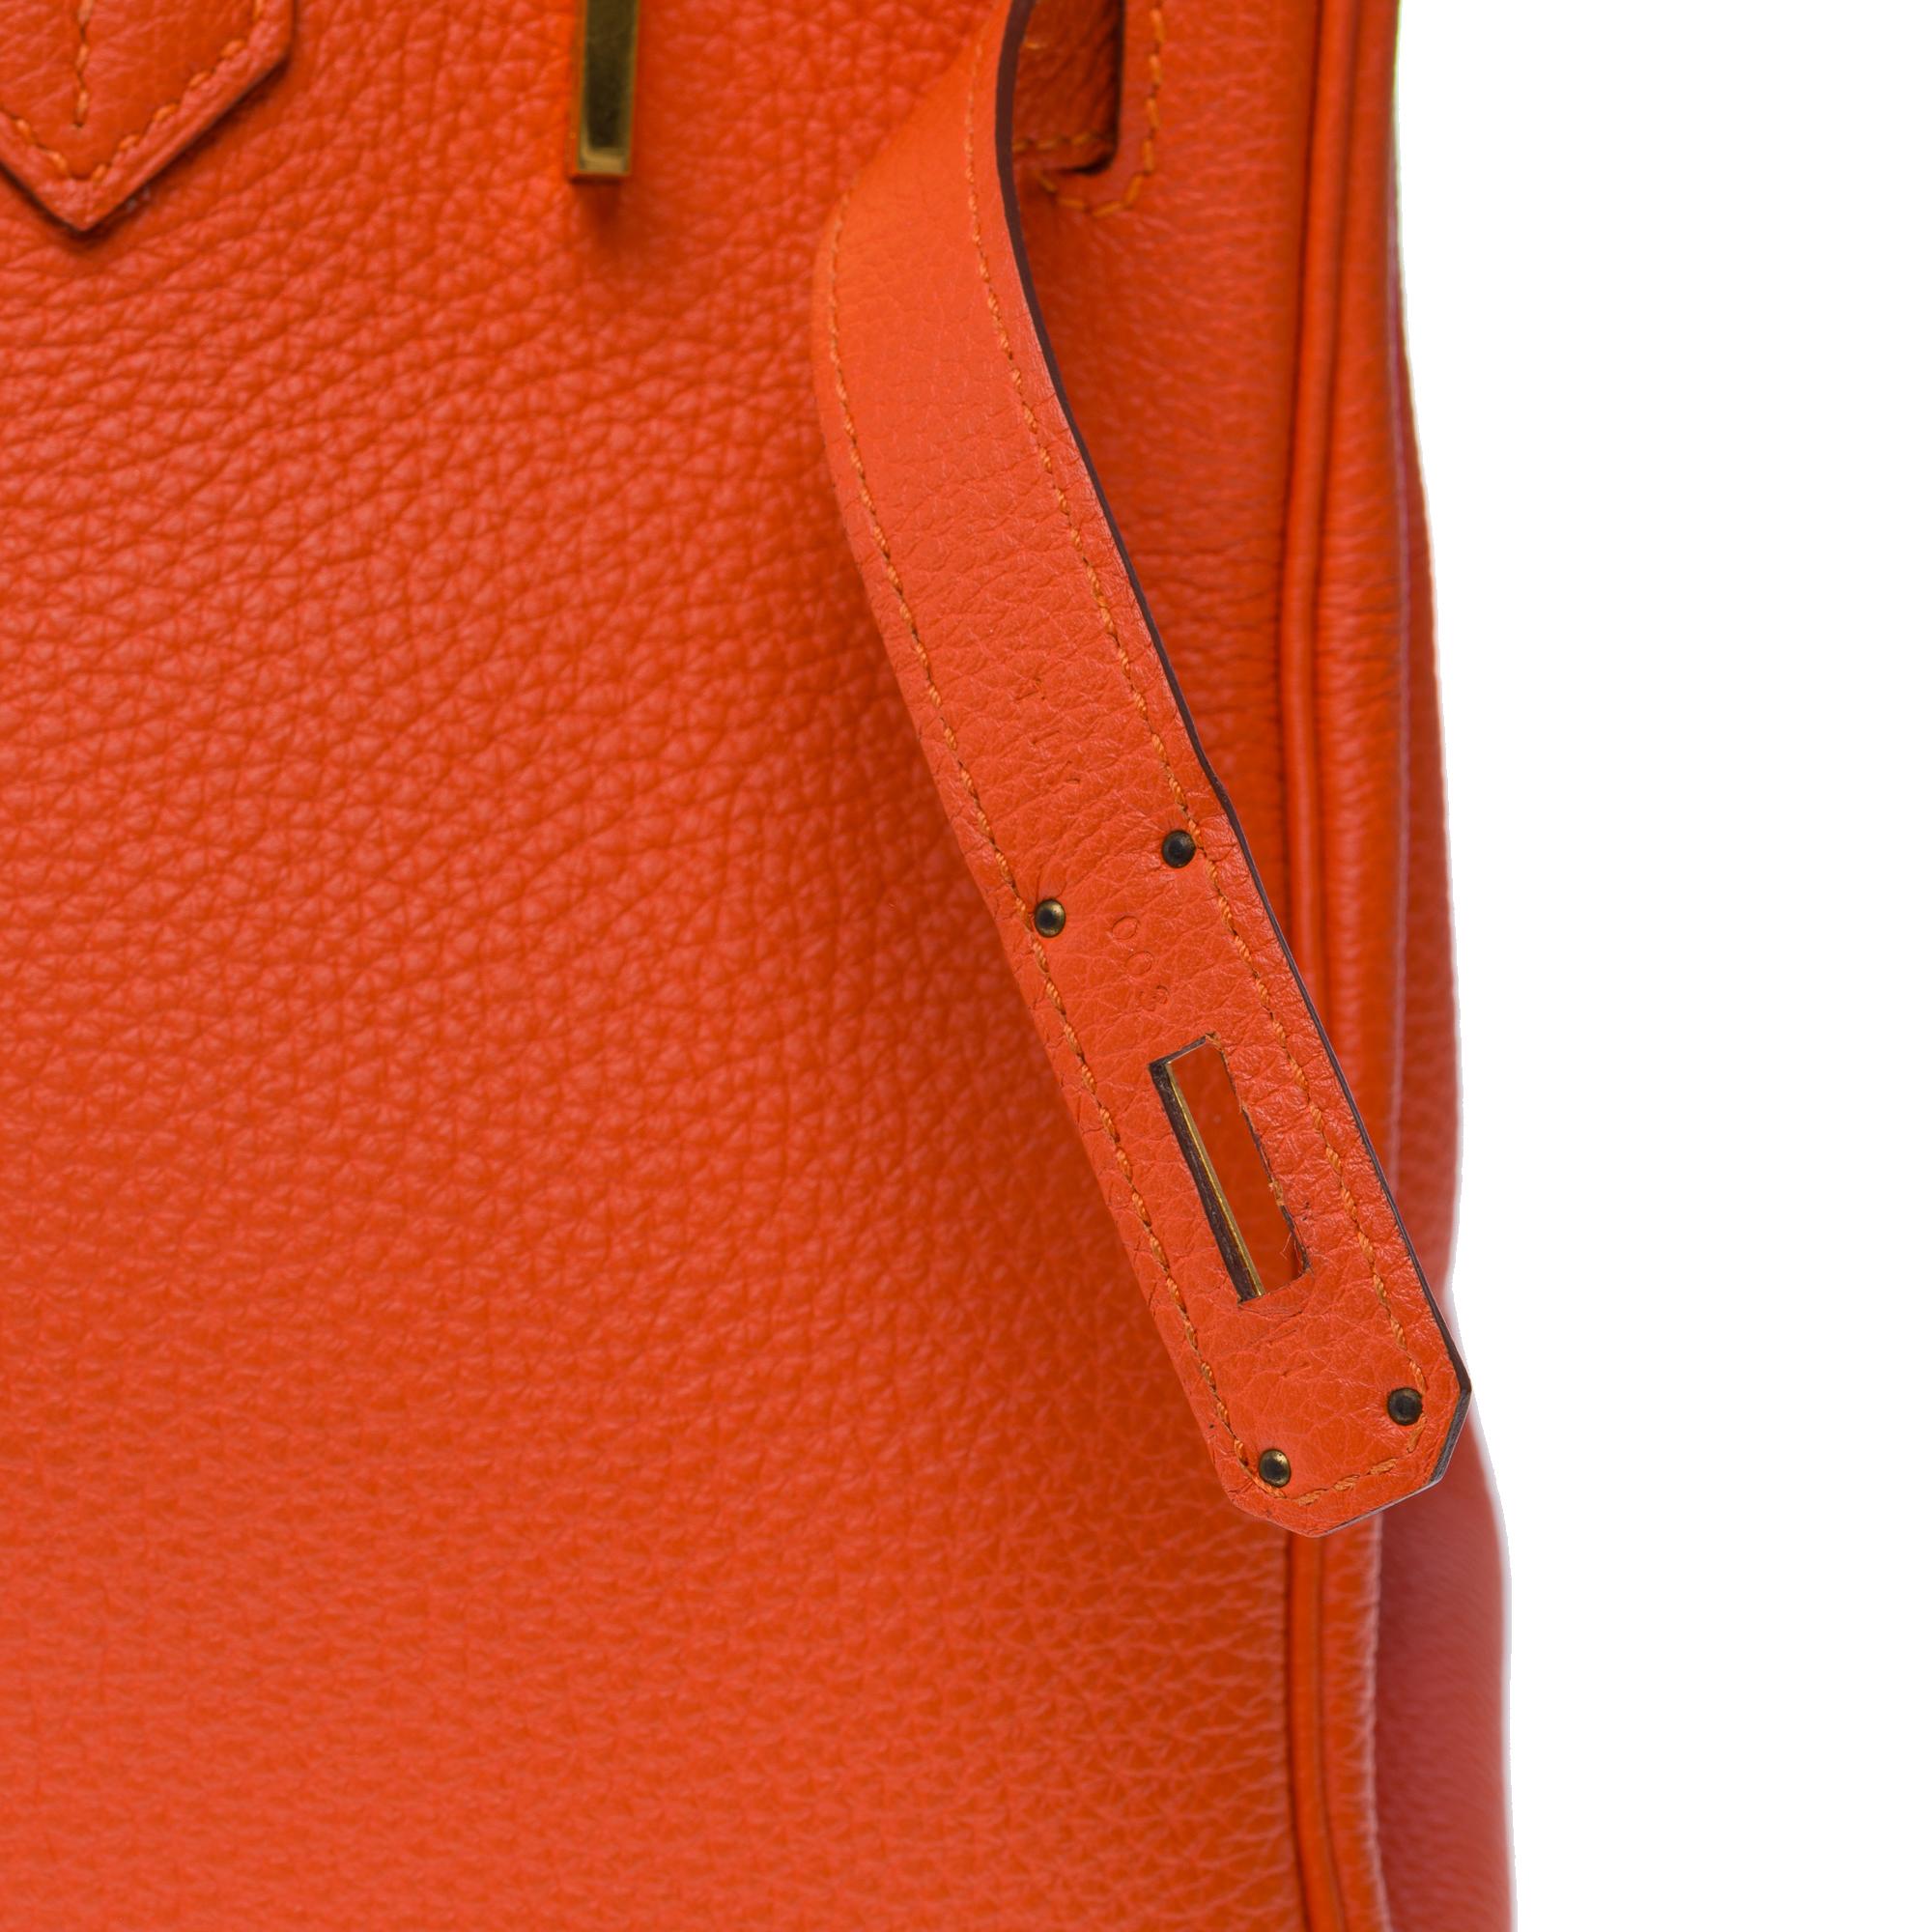 Superb Hermes Birkin 30 handbag in Taurillon Clemence Orange Poppy leather, GHW For Sale 2